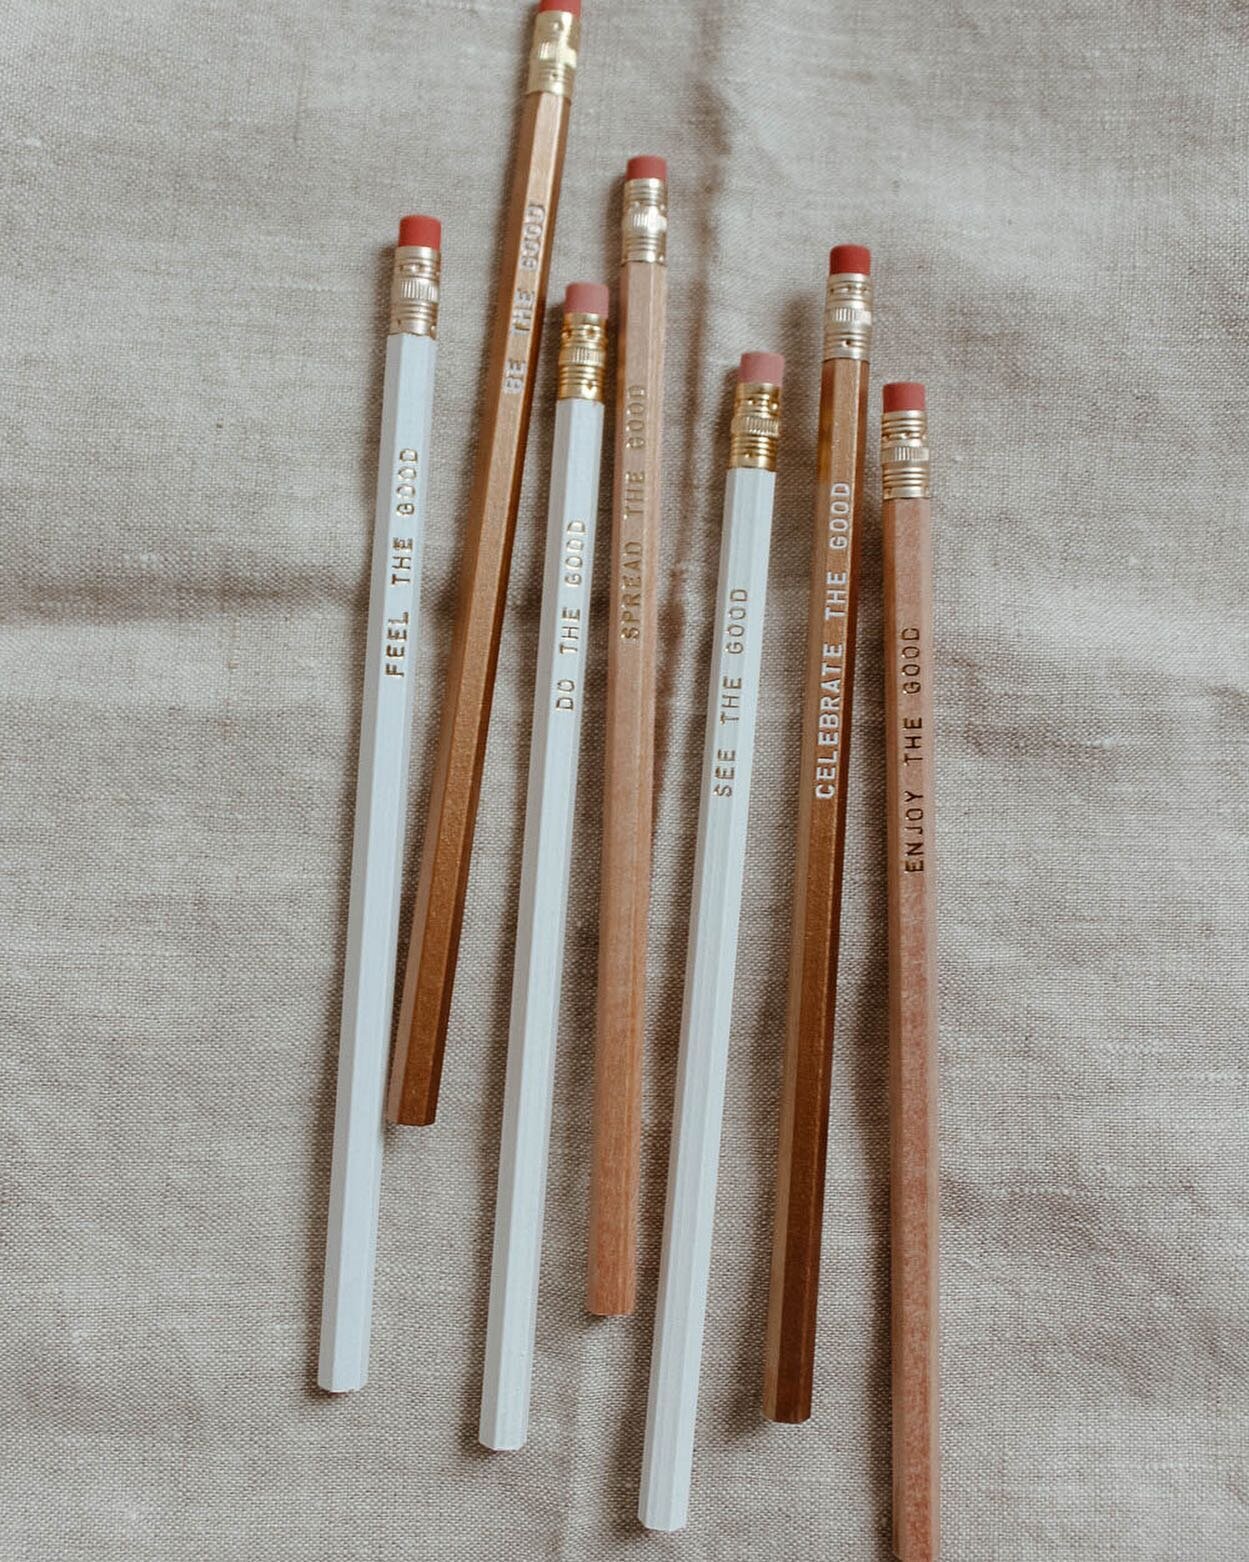 pencils &mdash; a perfect gift for teachers appreciation week this week!! 🧑&zwj;🏫
⠀⠀⠀⠀⠀⠀⠀⠀⠀
#teachersgift